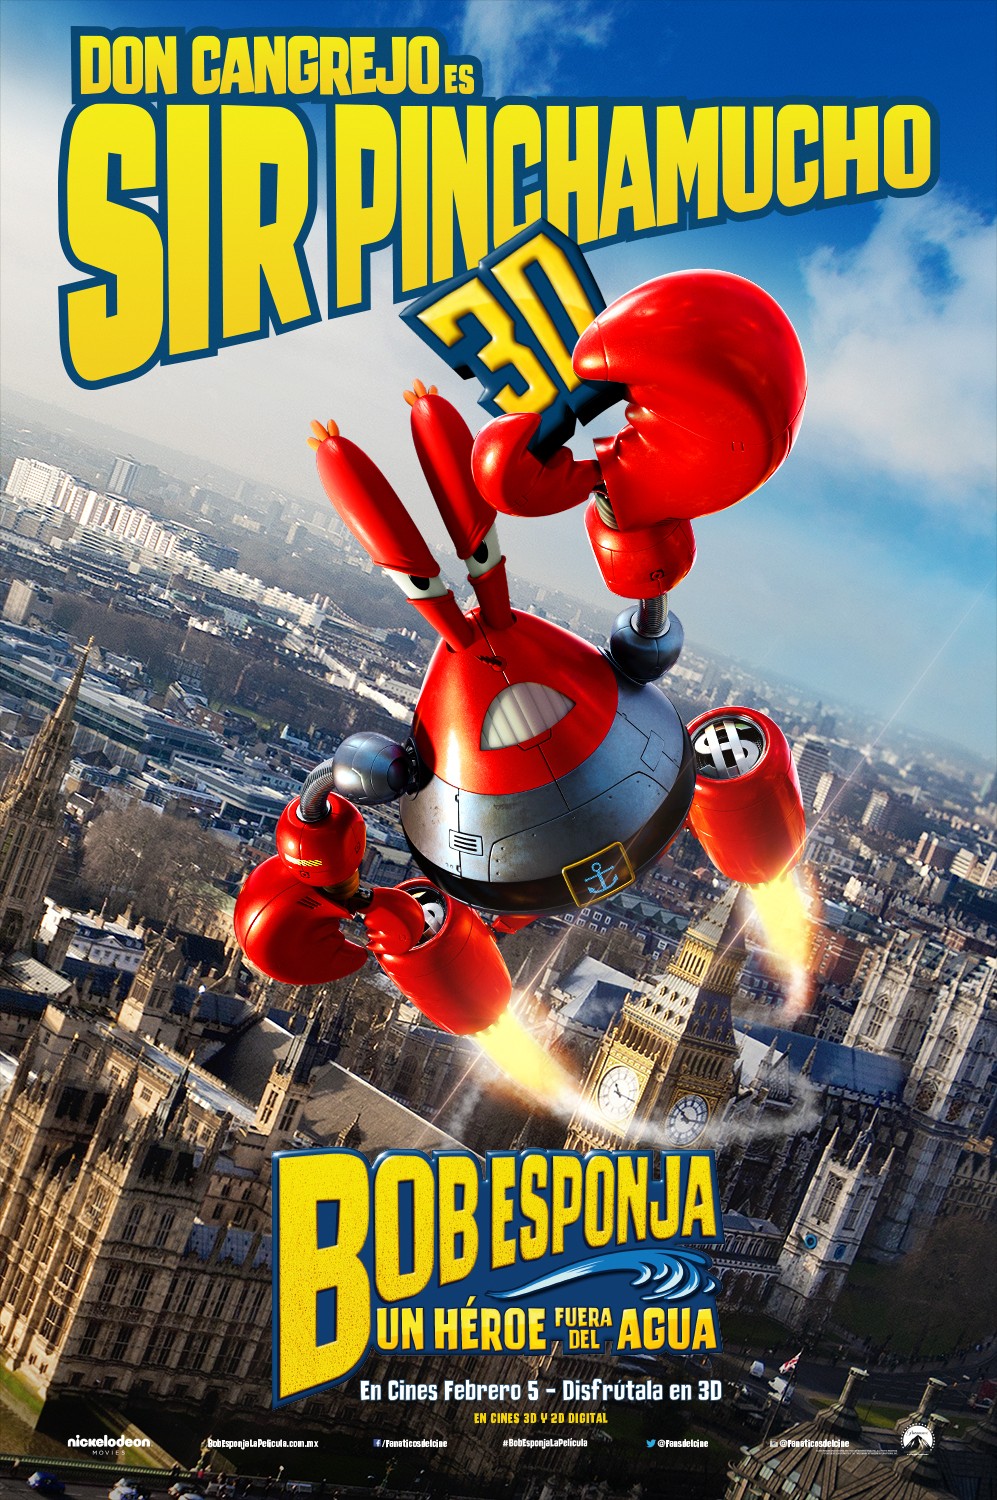 spongebob sponge dvd trailer posters poster netflix bob esponja redbox